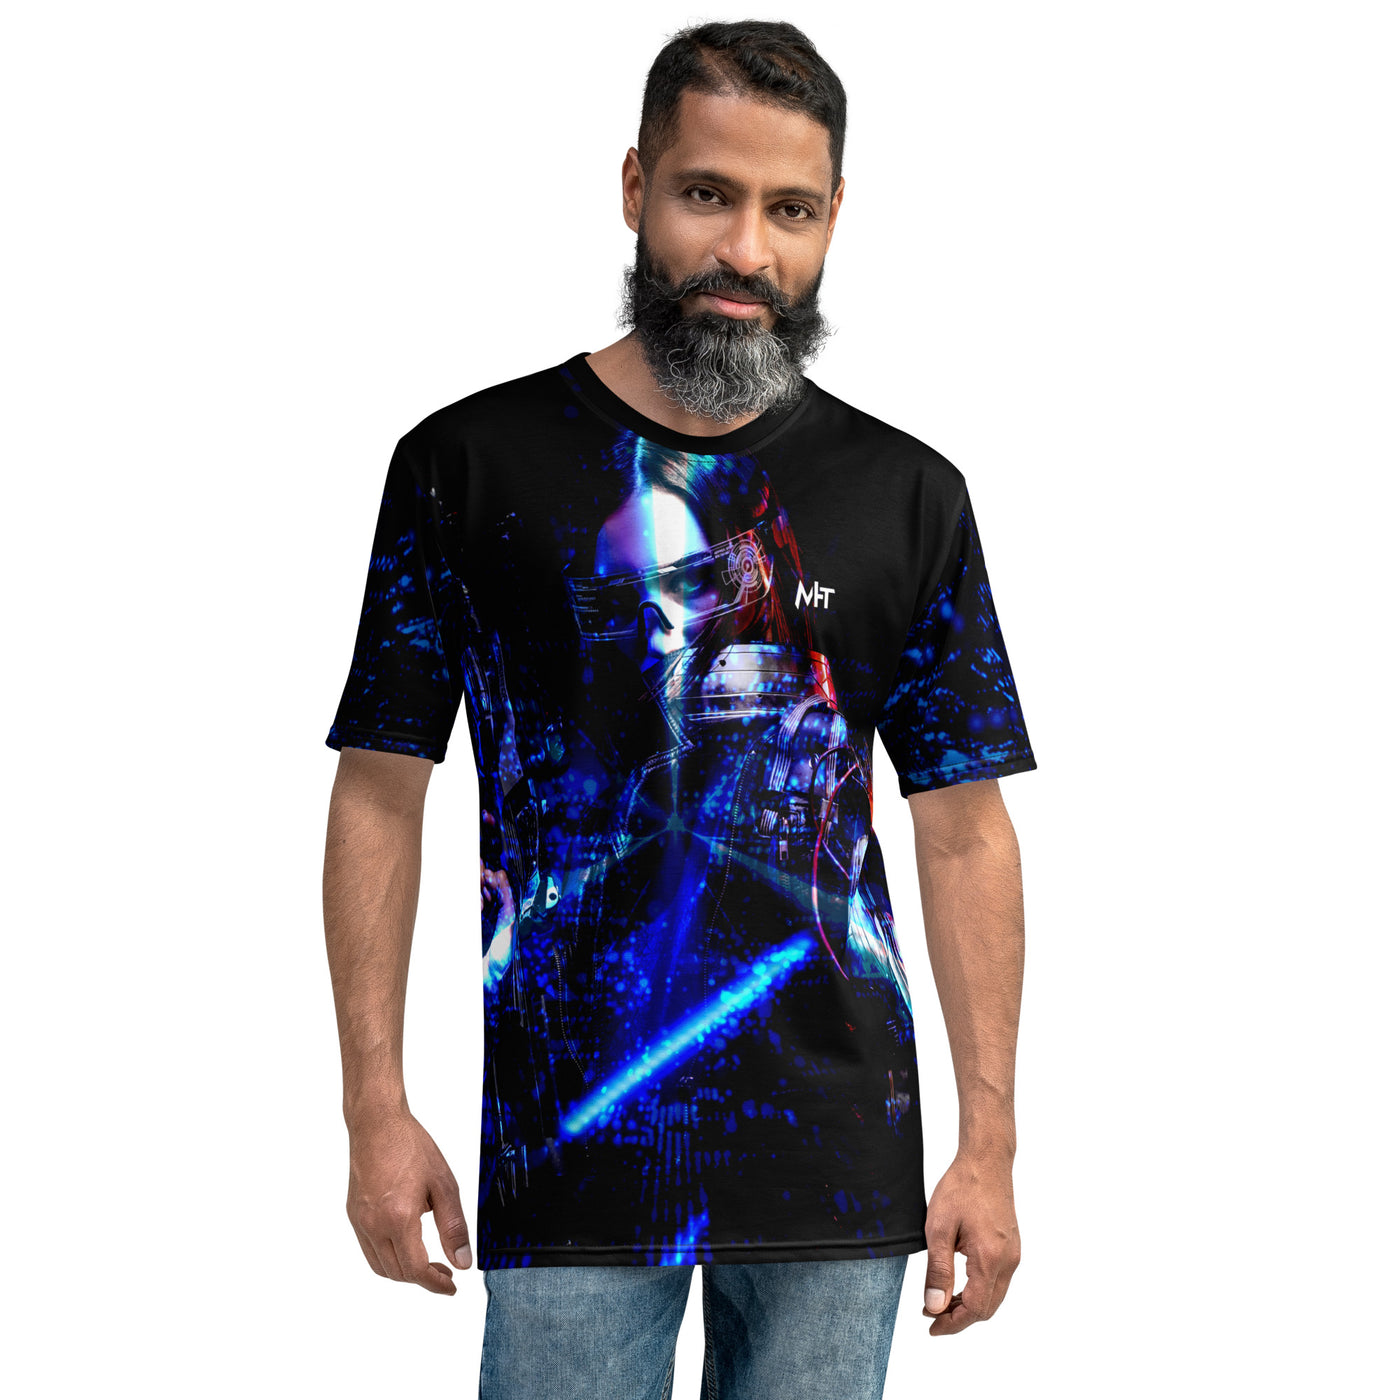 Cyberware Sentinel v1.0 - Men's t-shirt